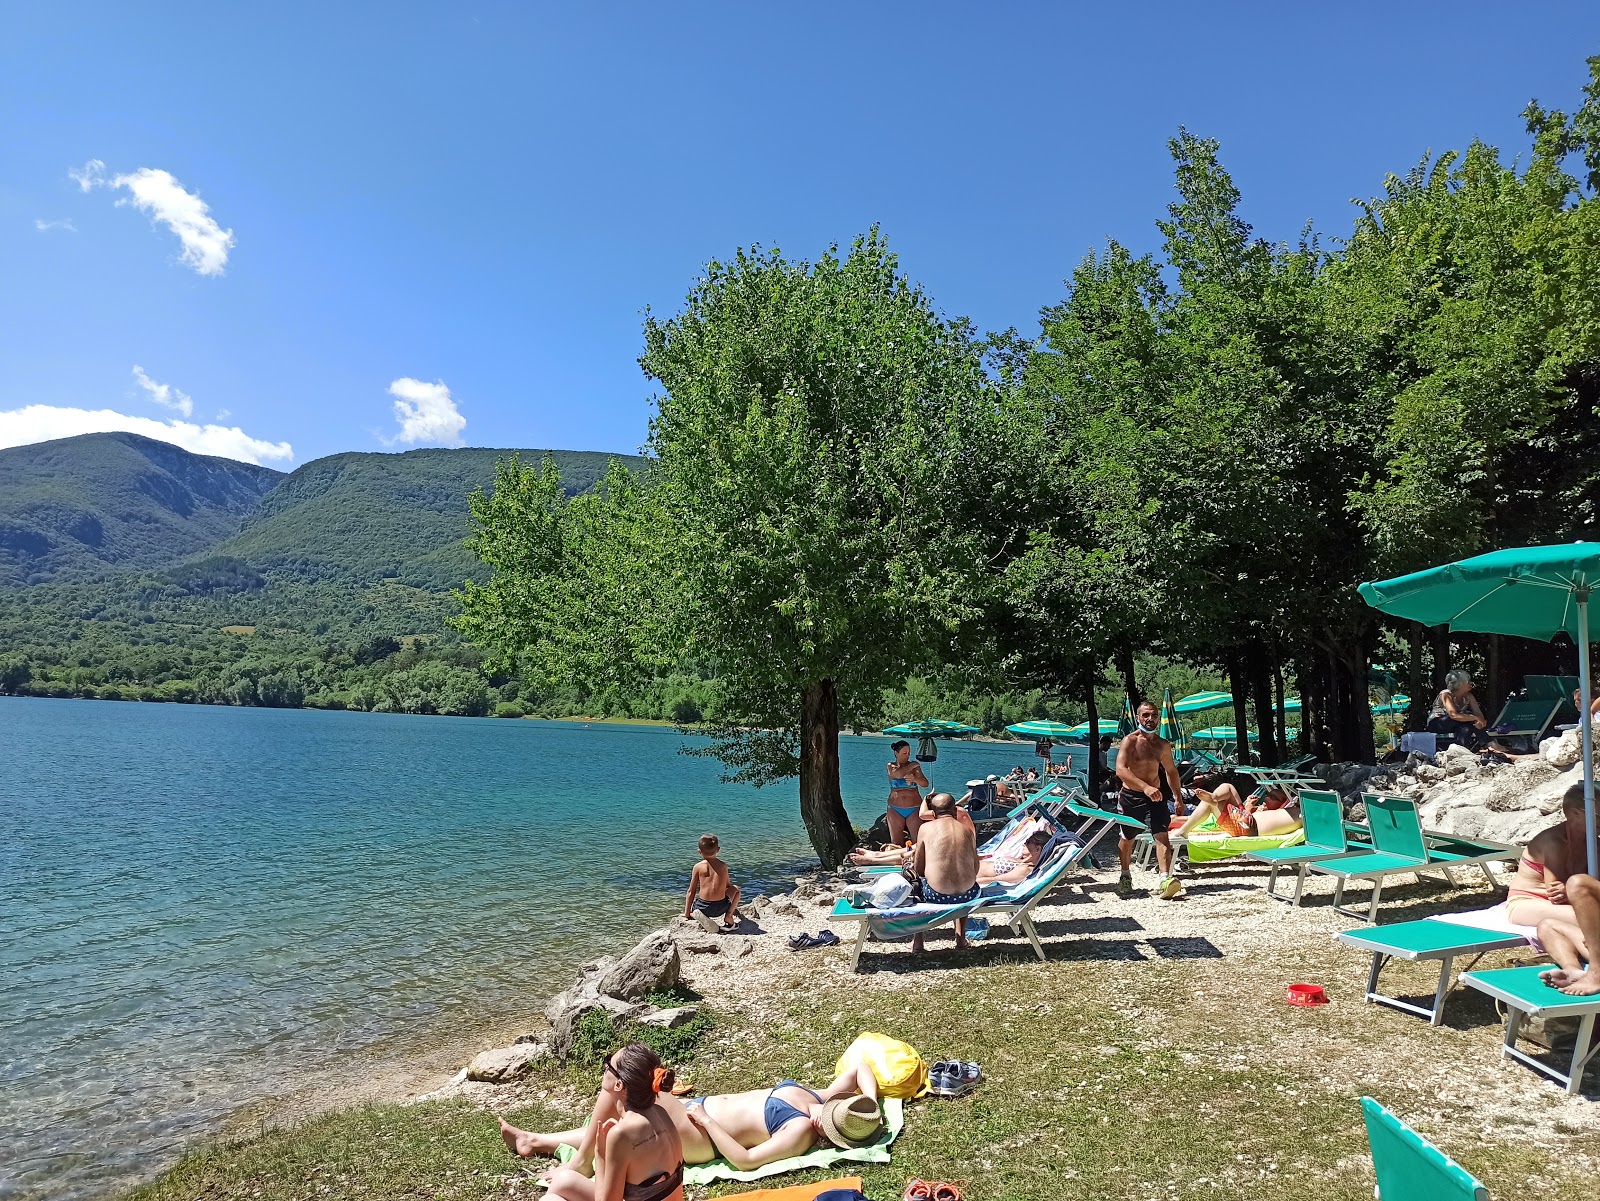 Spiaggia La Gravara - Lago di Barrea的照片 带有碧绿色水表面